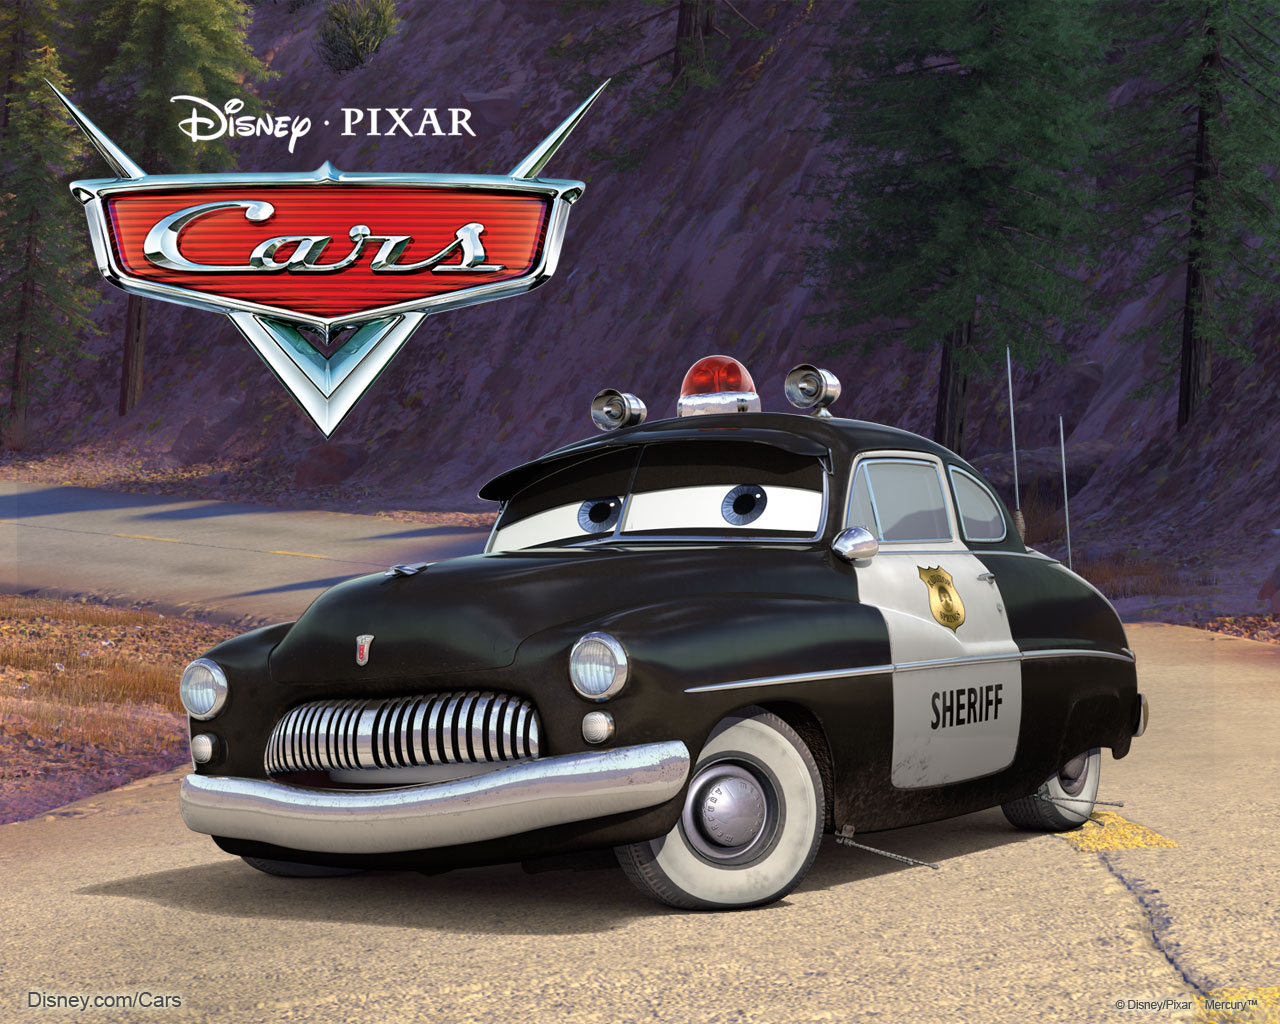 Disney Pixar Cars Cartoon Characters " Sheriff " Wallpaper